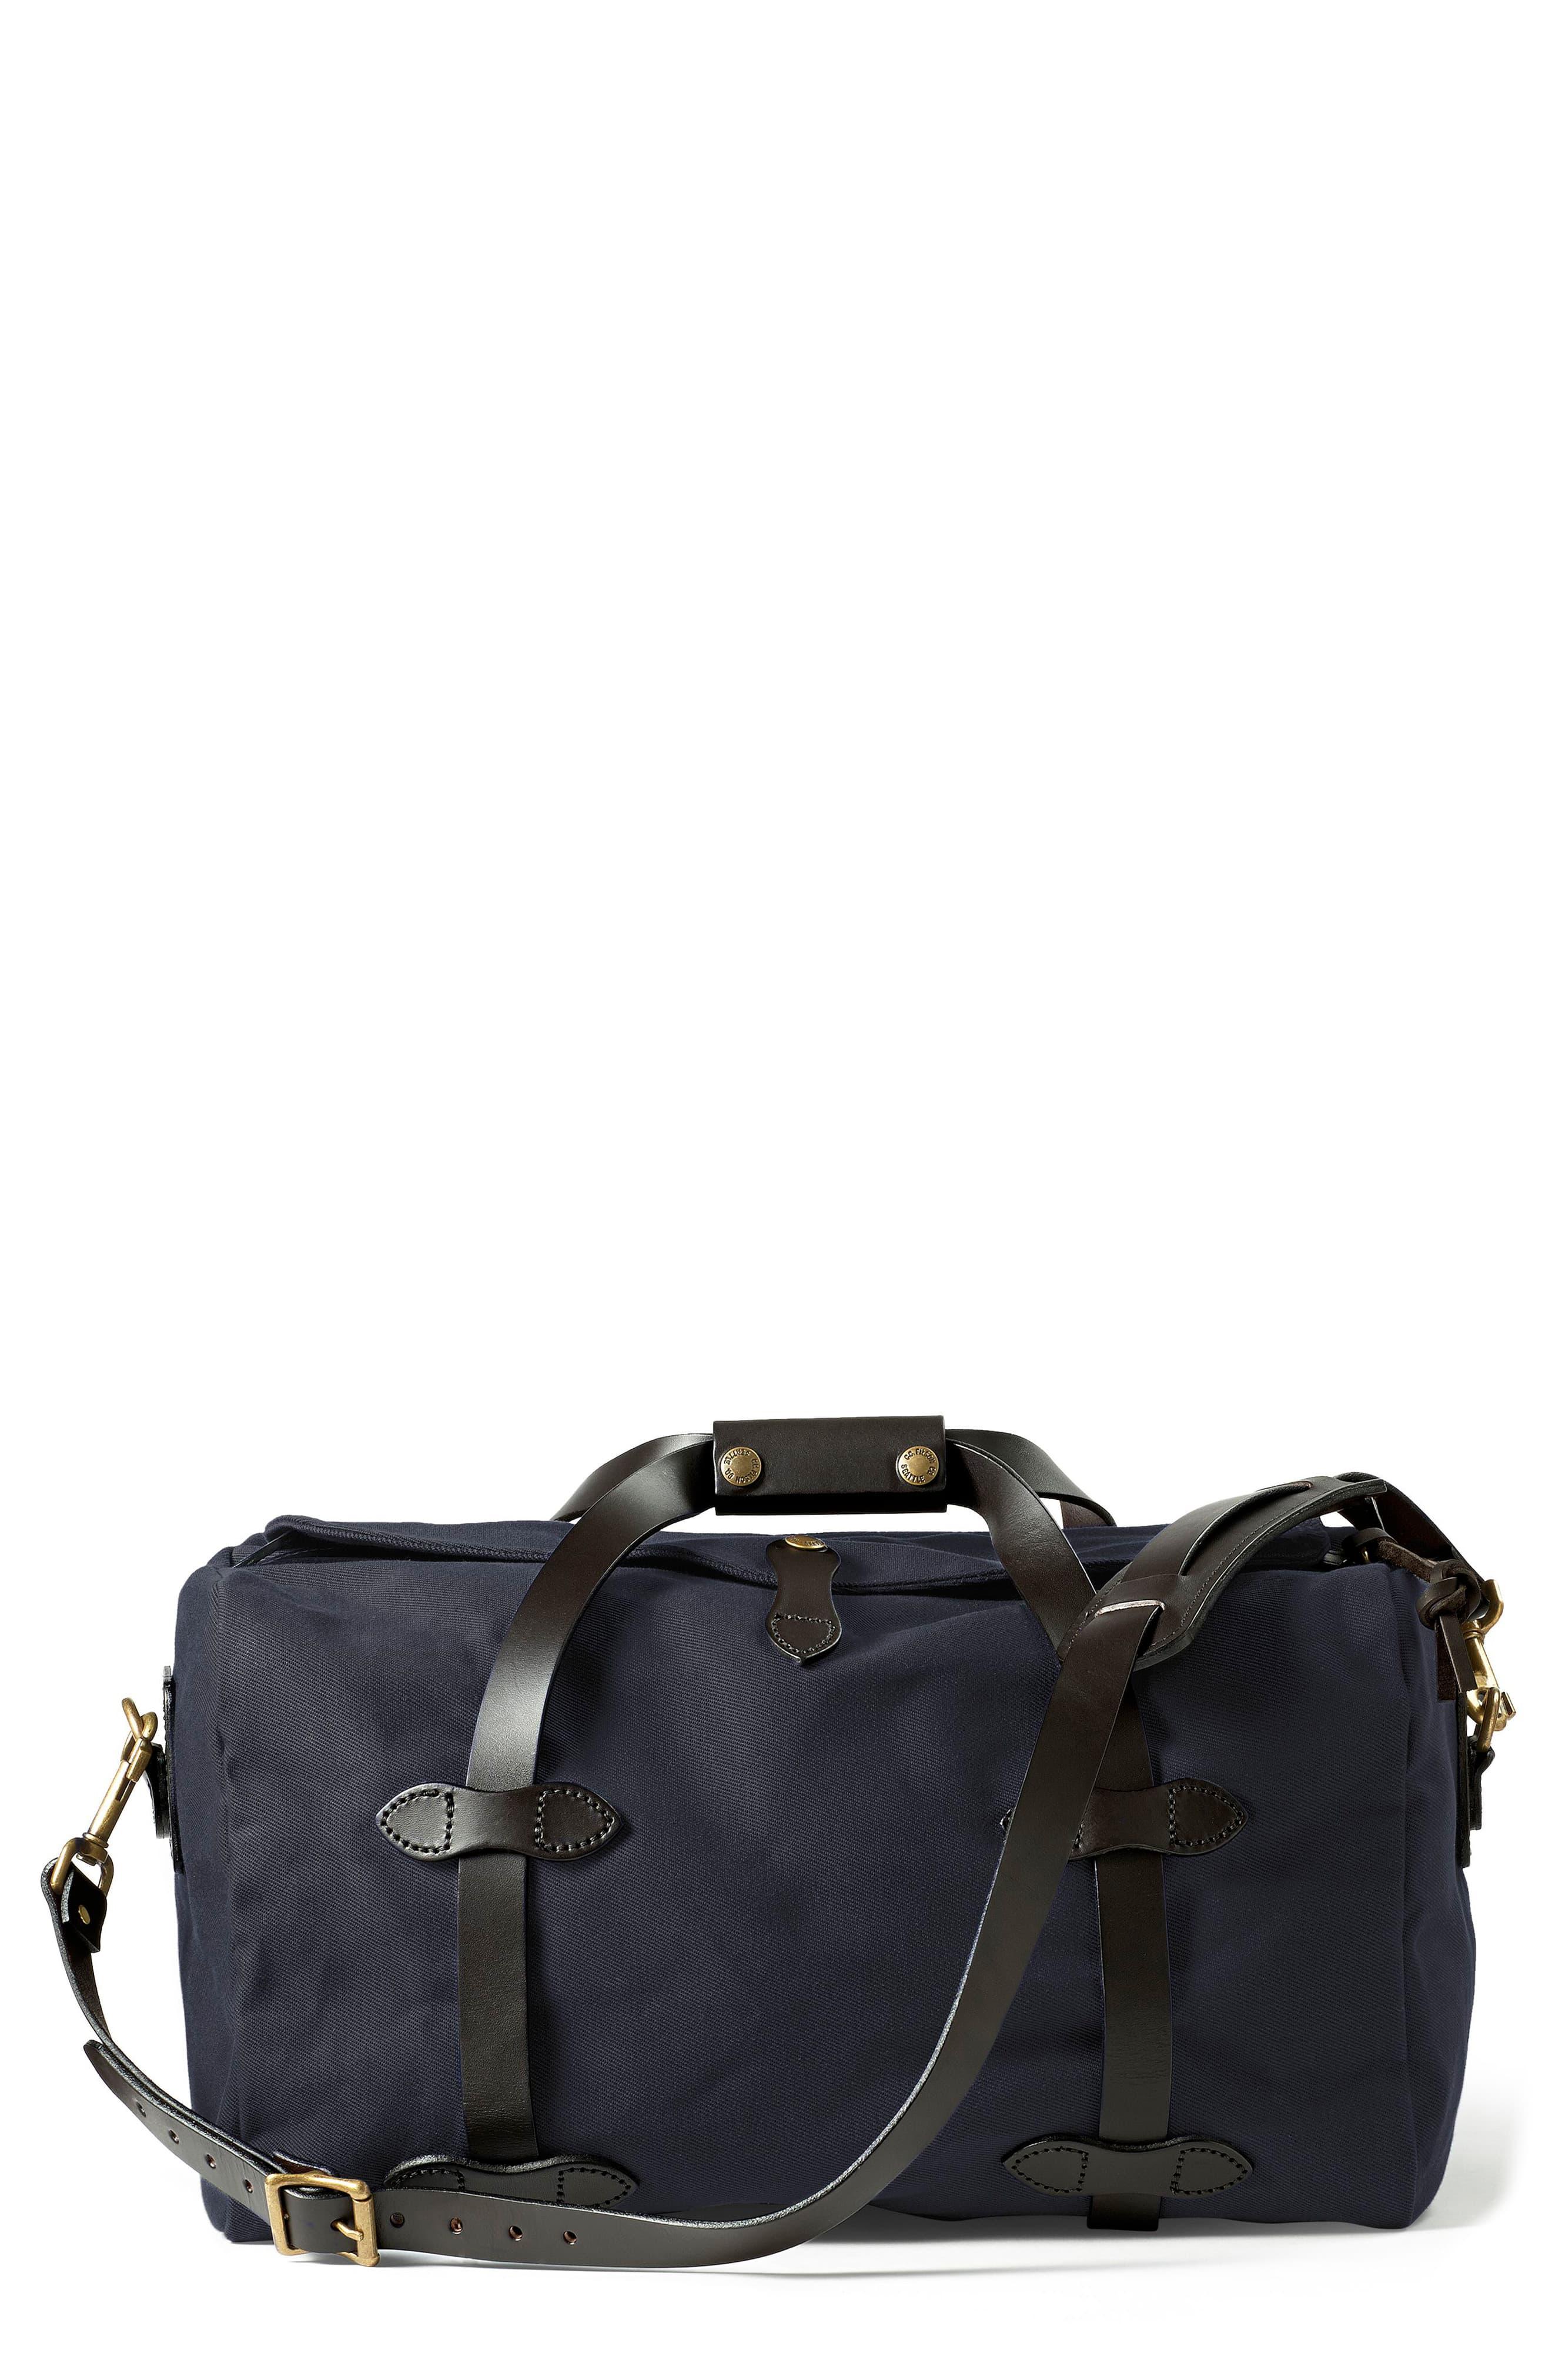 Filson Small Duffle Bag in Navy (Blue) for Men - Lyst